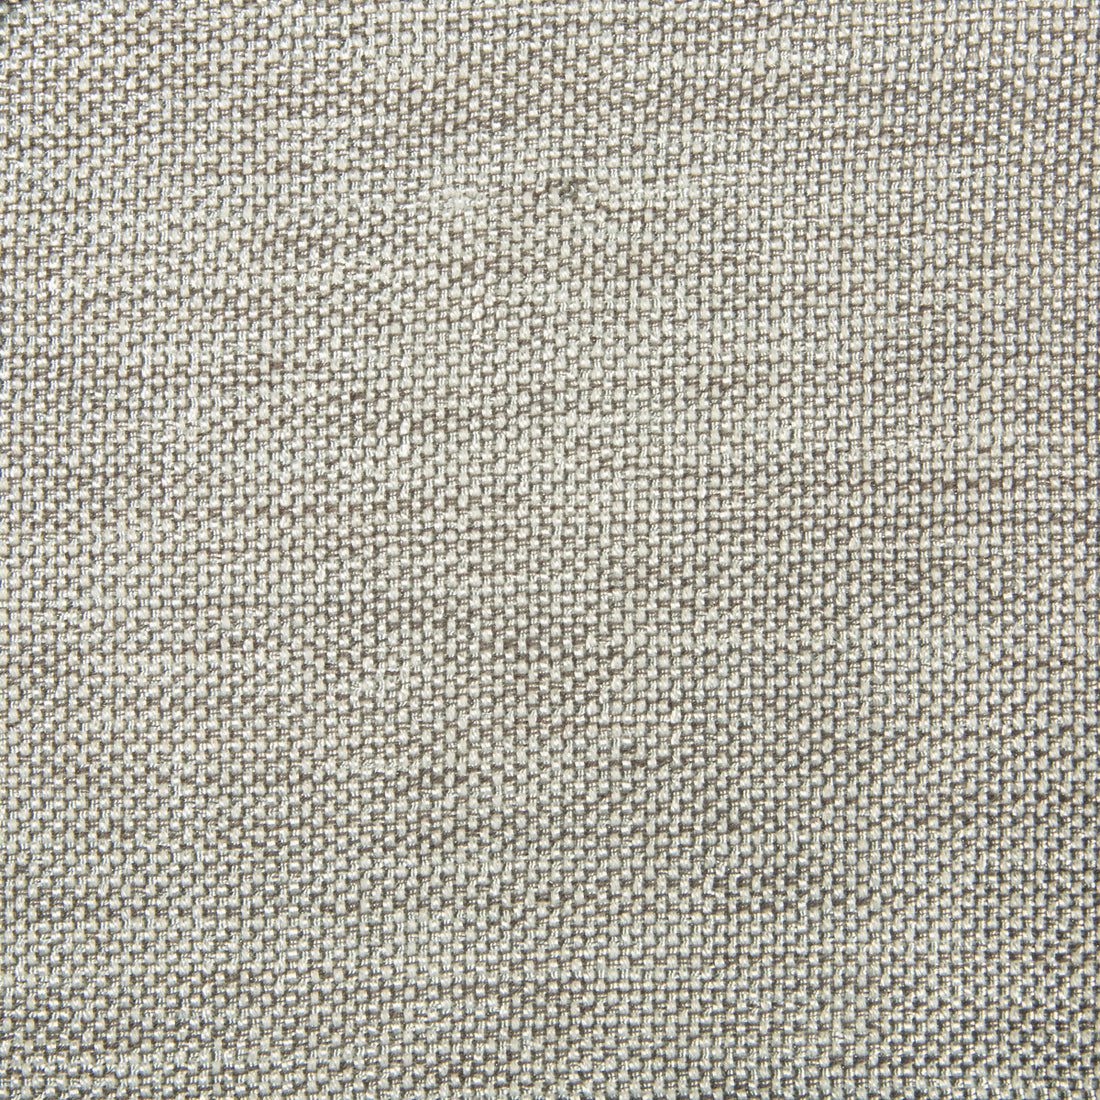 Kravet Smart fabric in 34939-1121 color - pattern 34939.1121.0 - by Kravet Smart